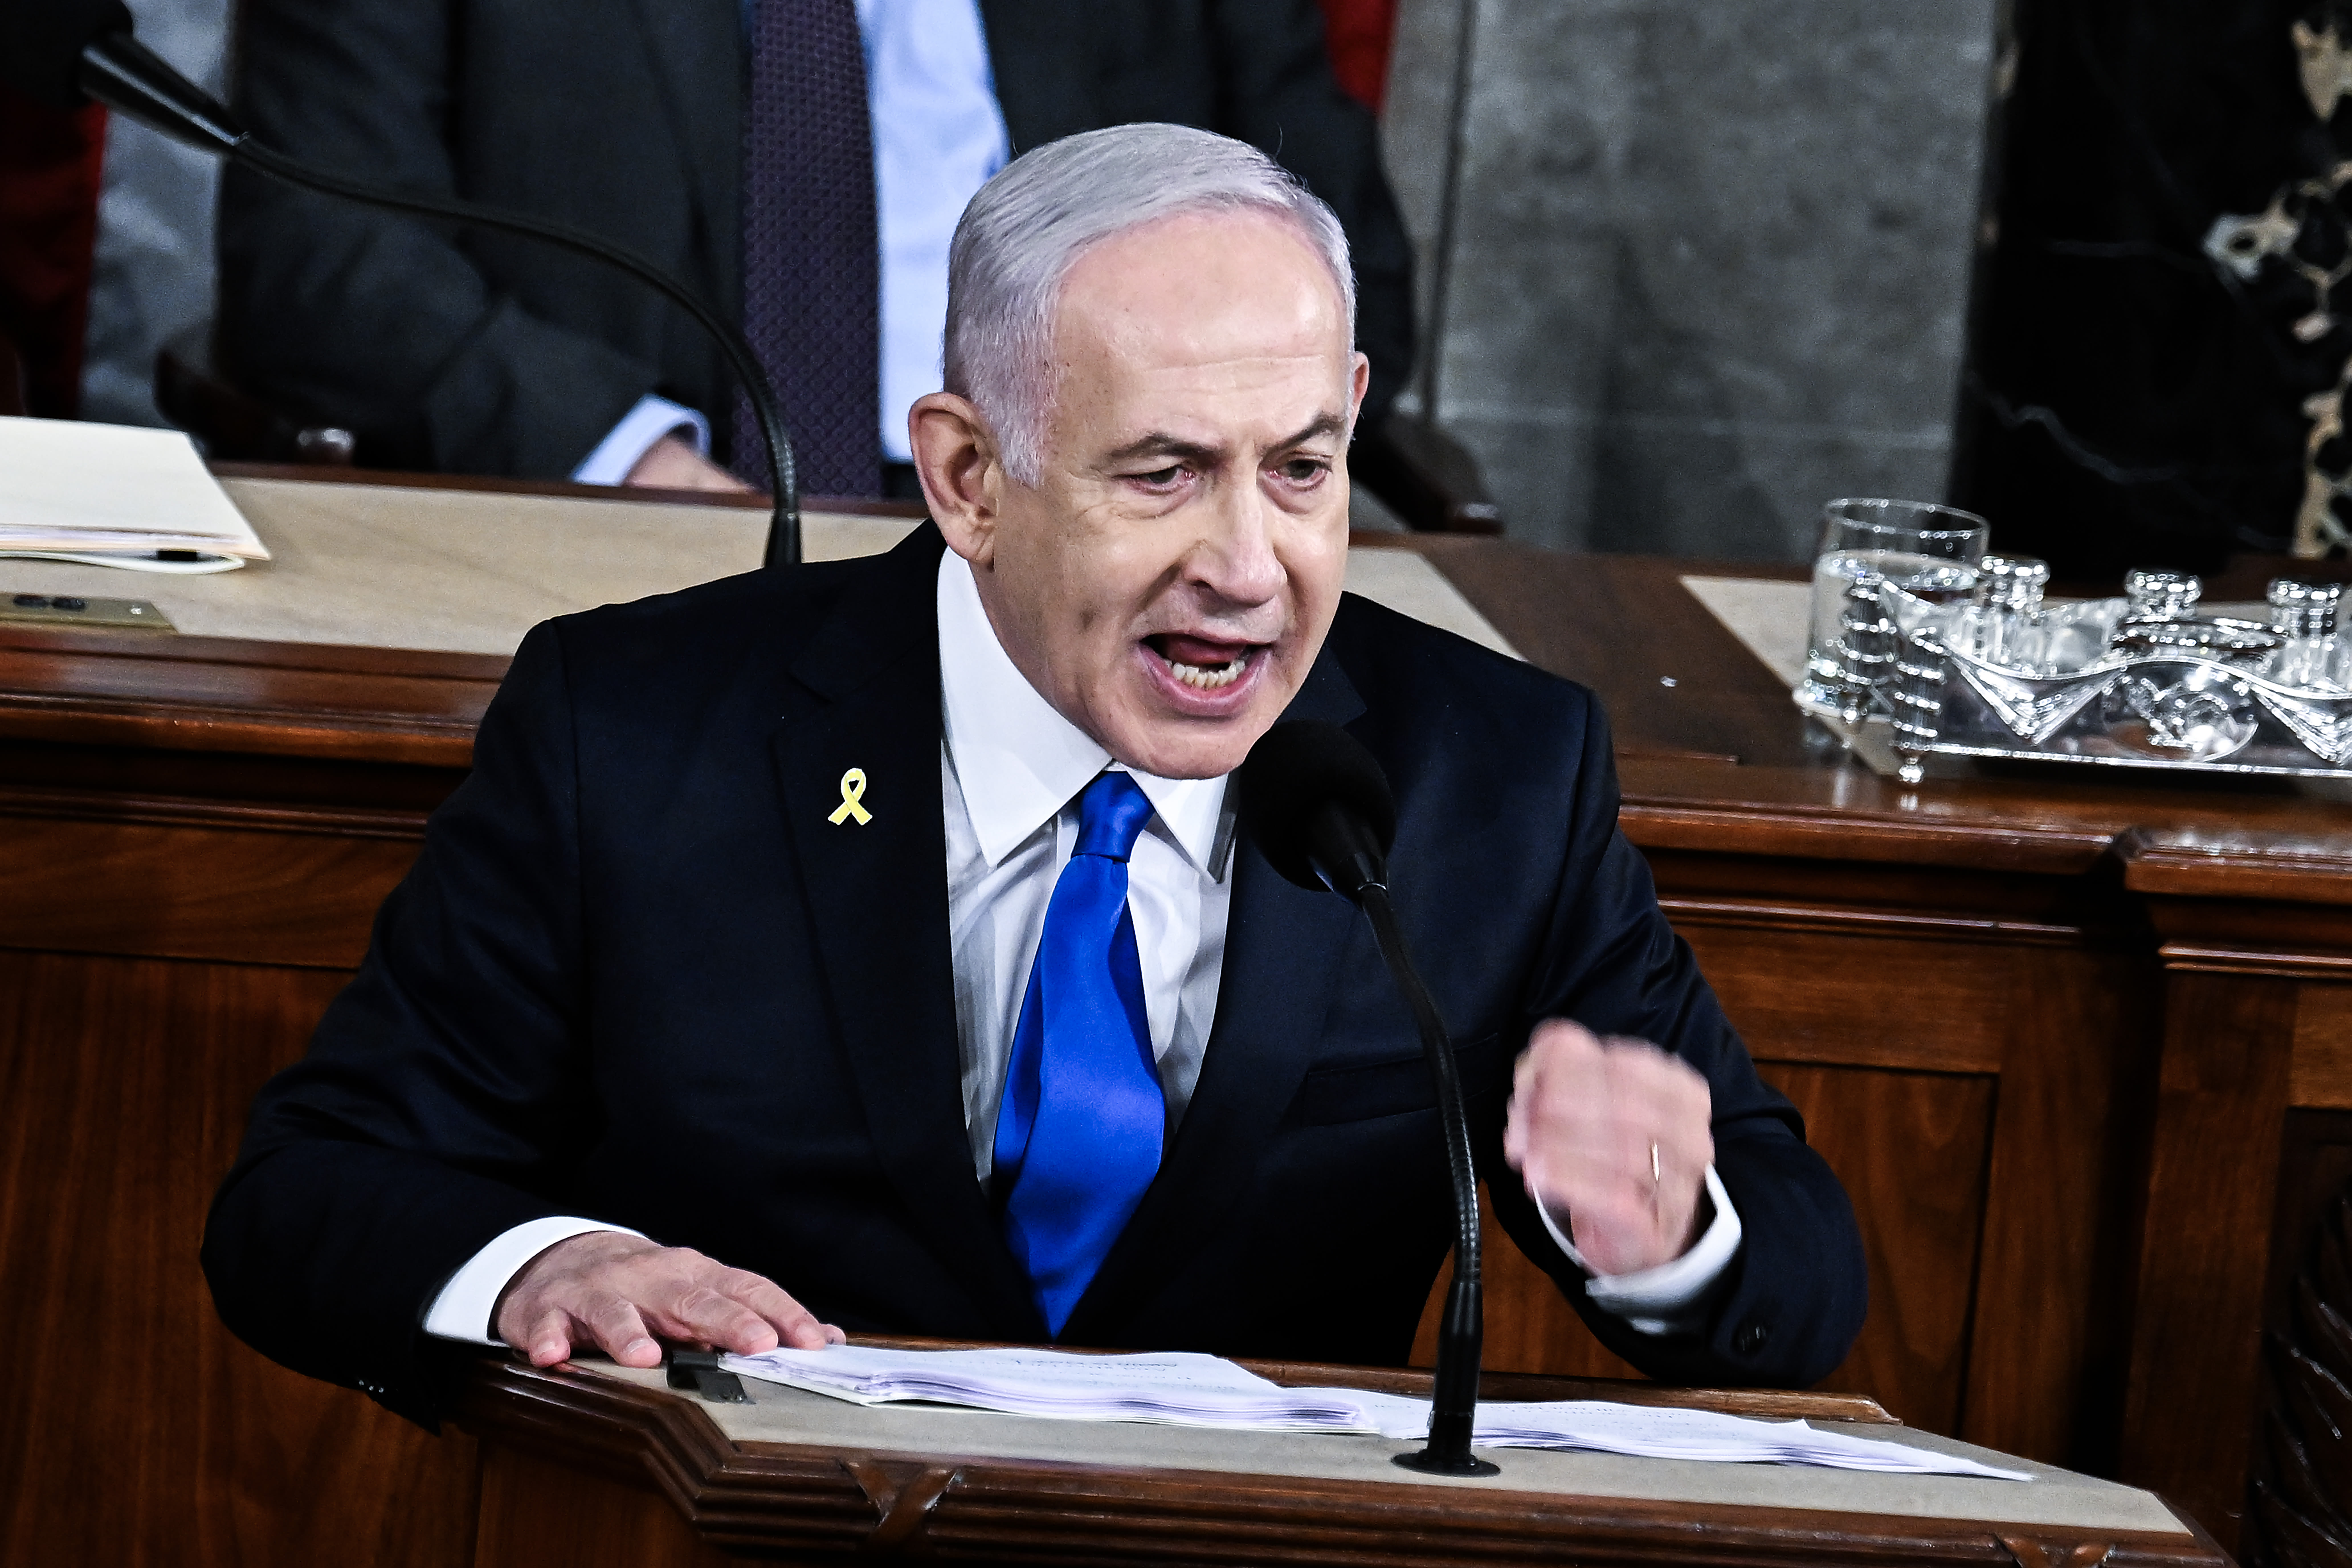 Netanyahu, Defiant, Appears to Have Gone Rogue, Risking a Regional War